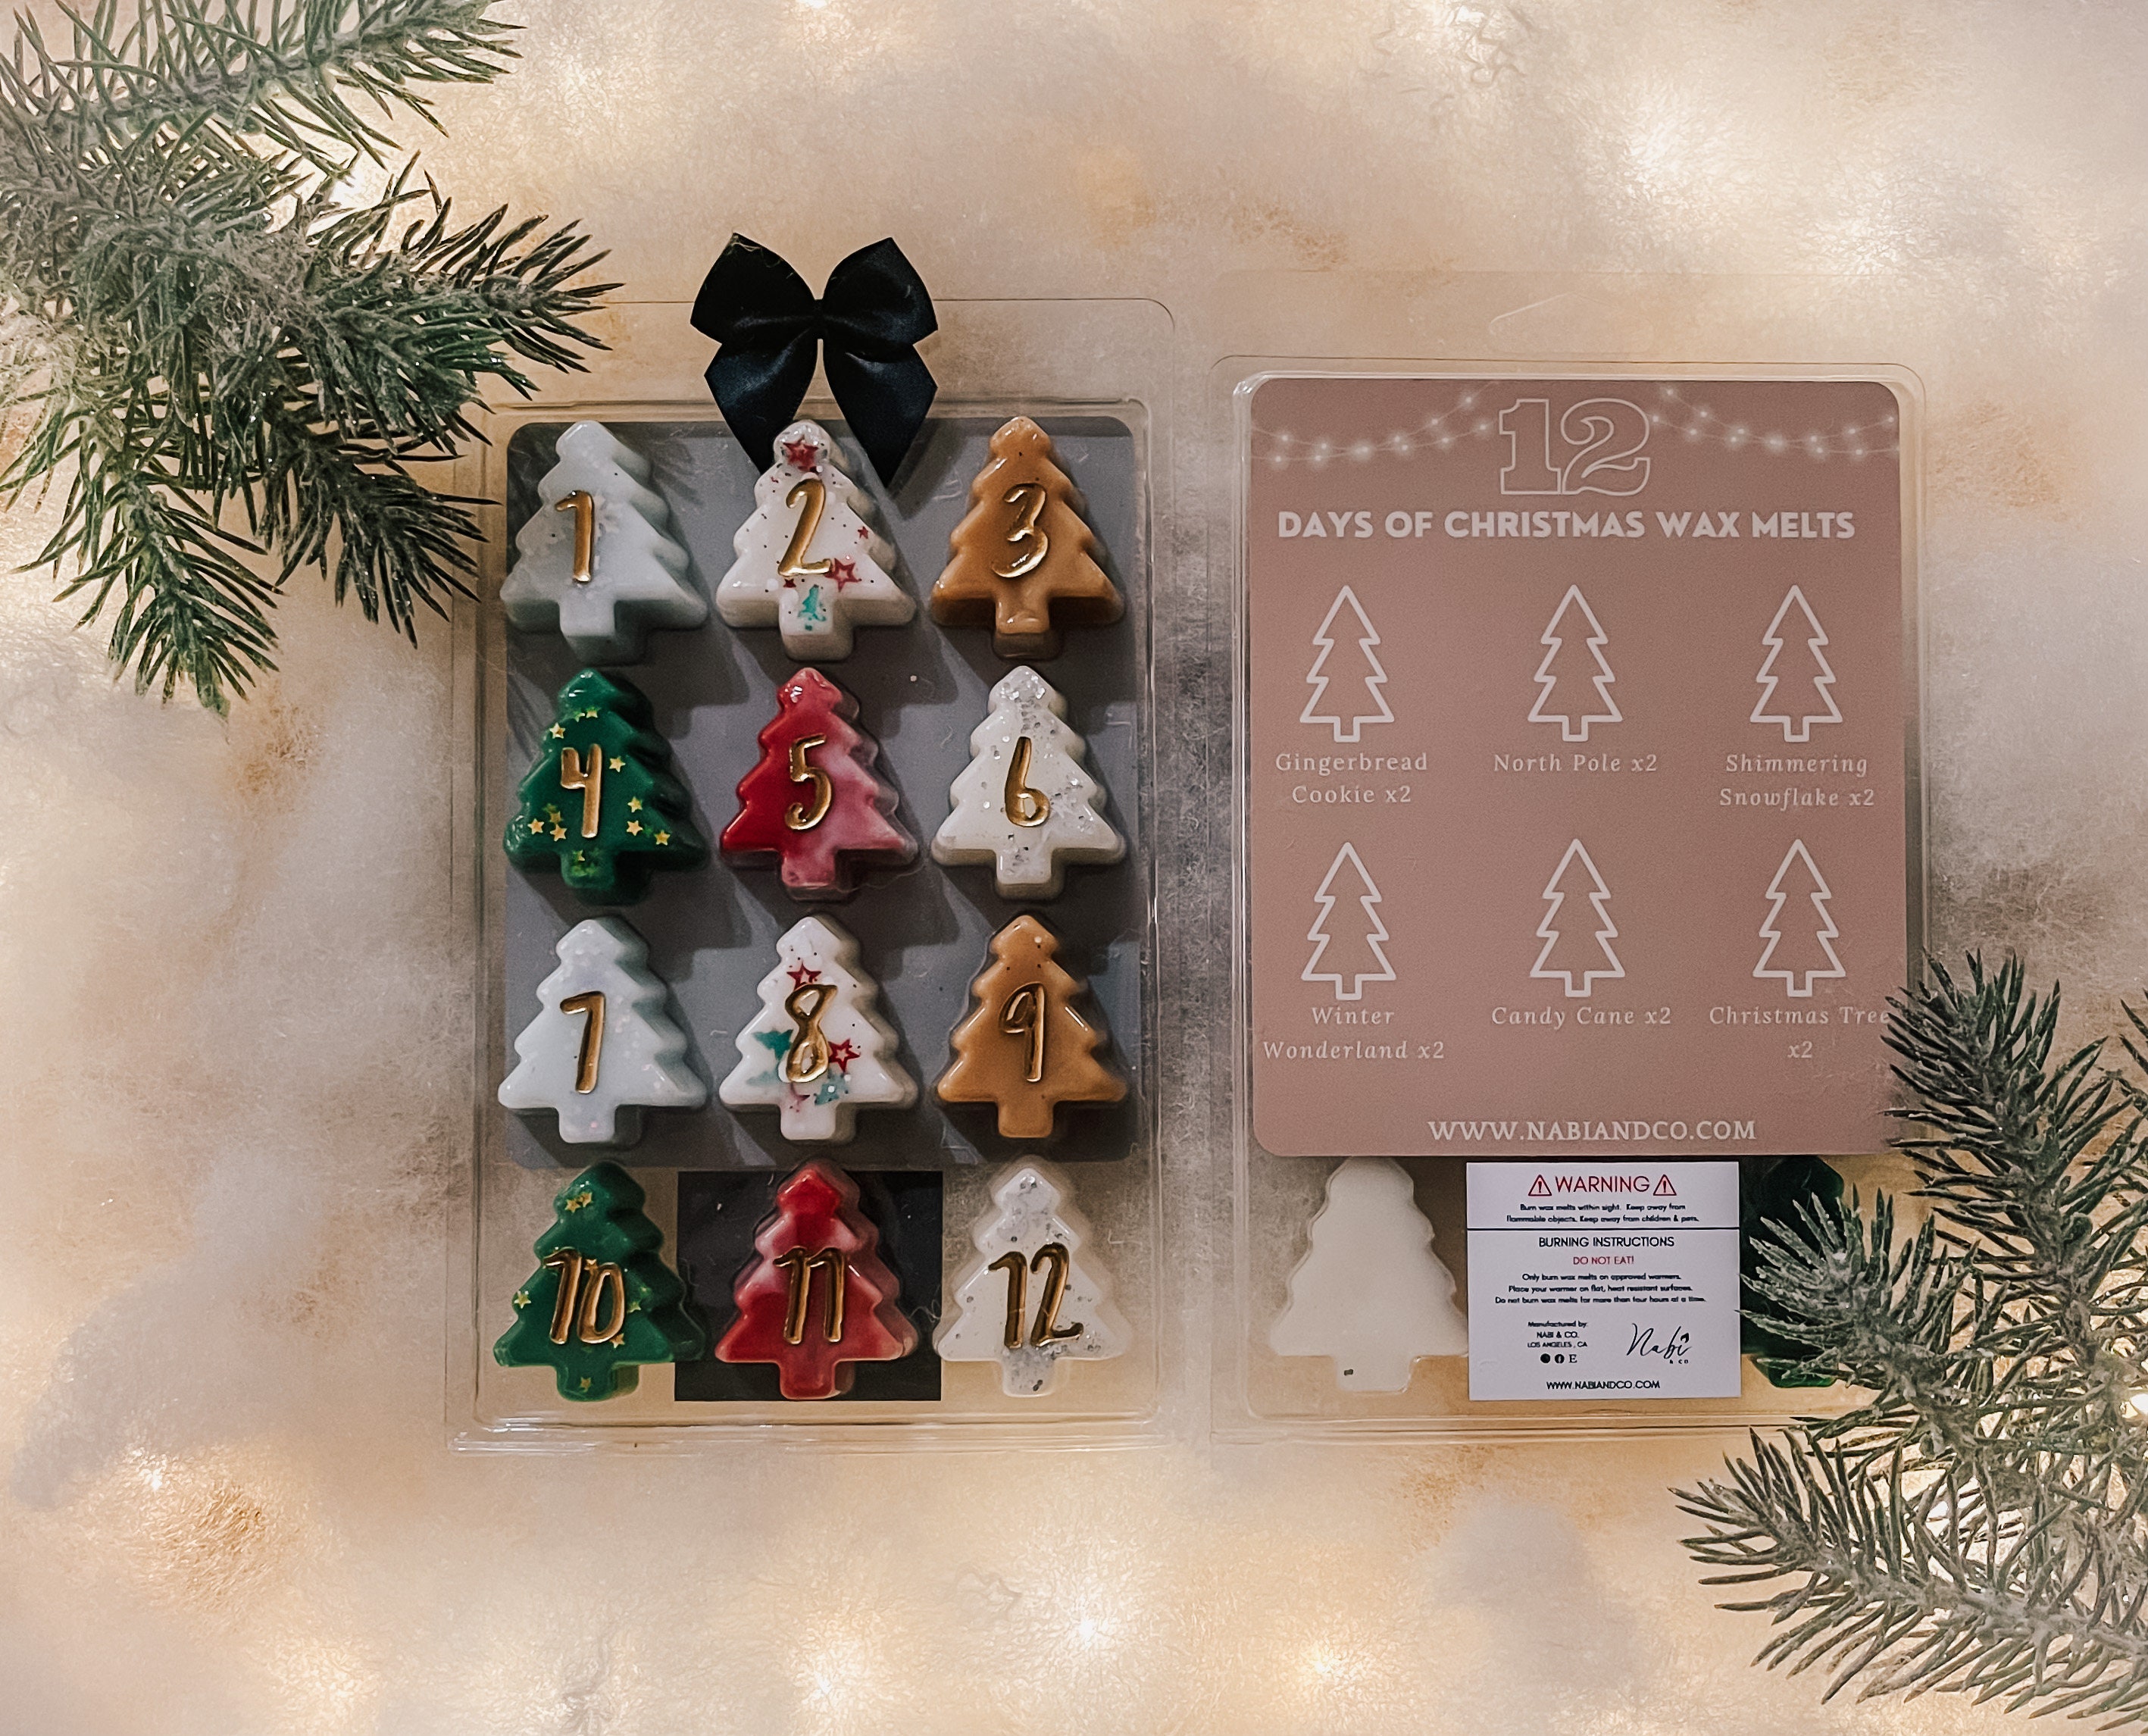 Christmas tree clamshells €4.50 Each - Kiara's Wax Melts